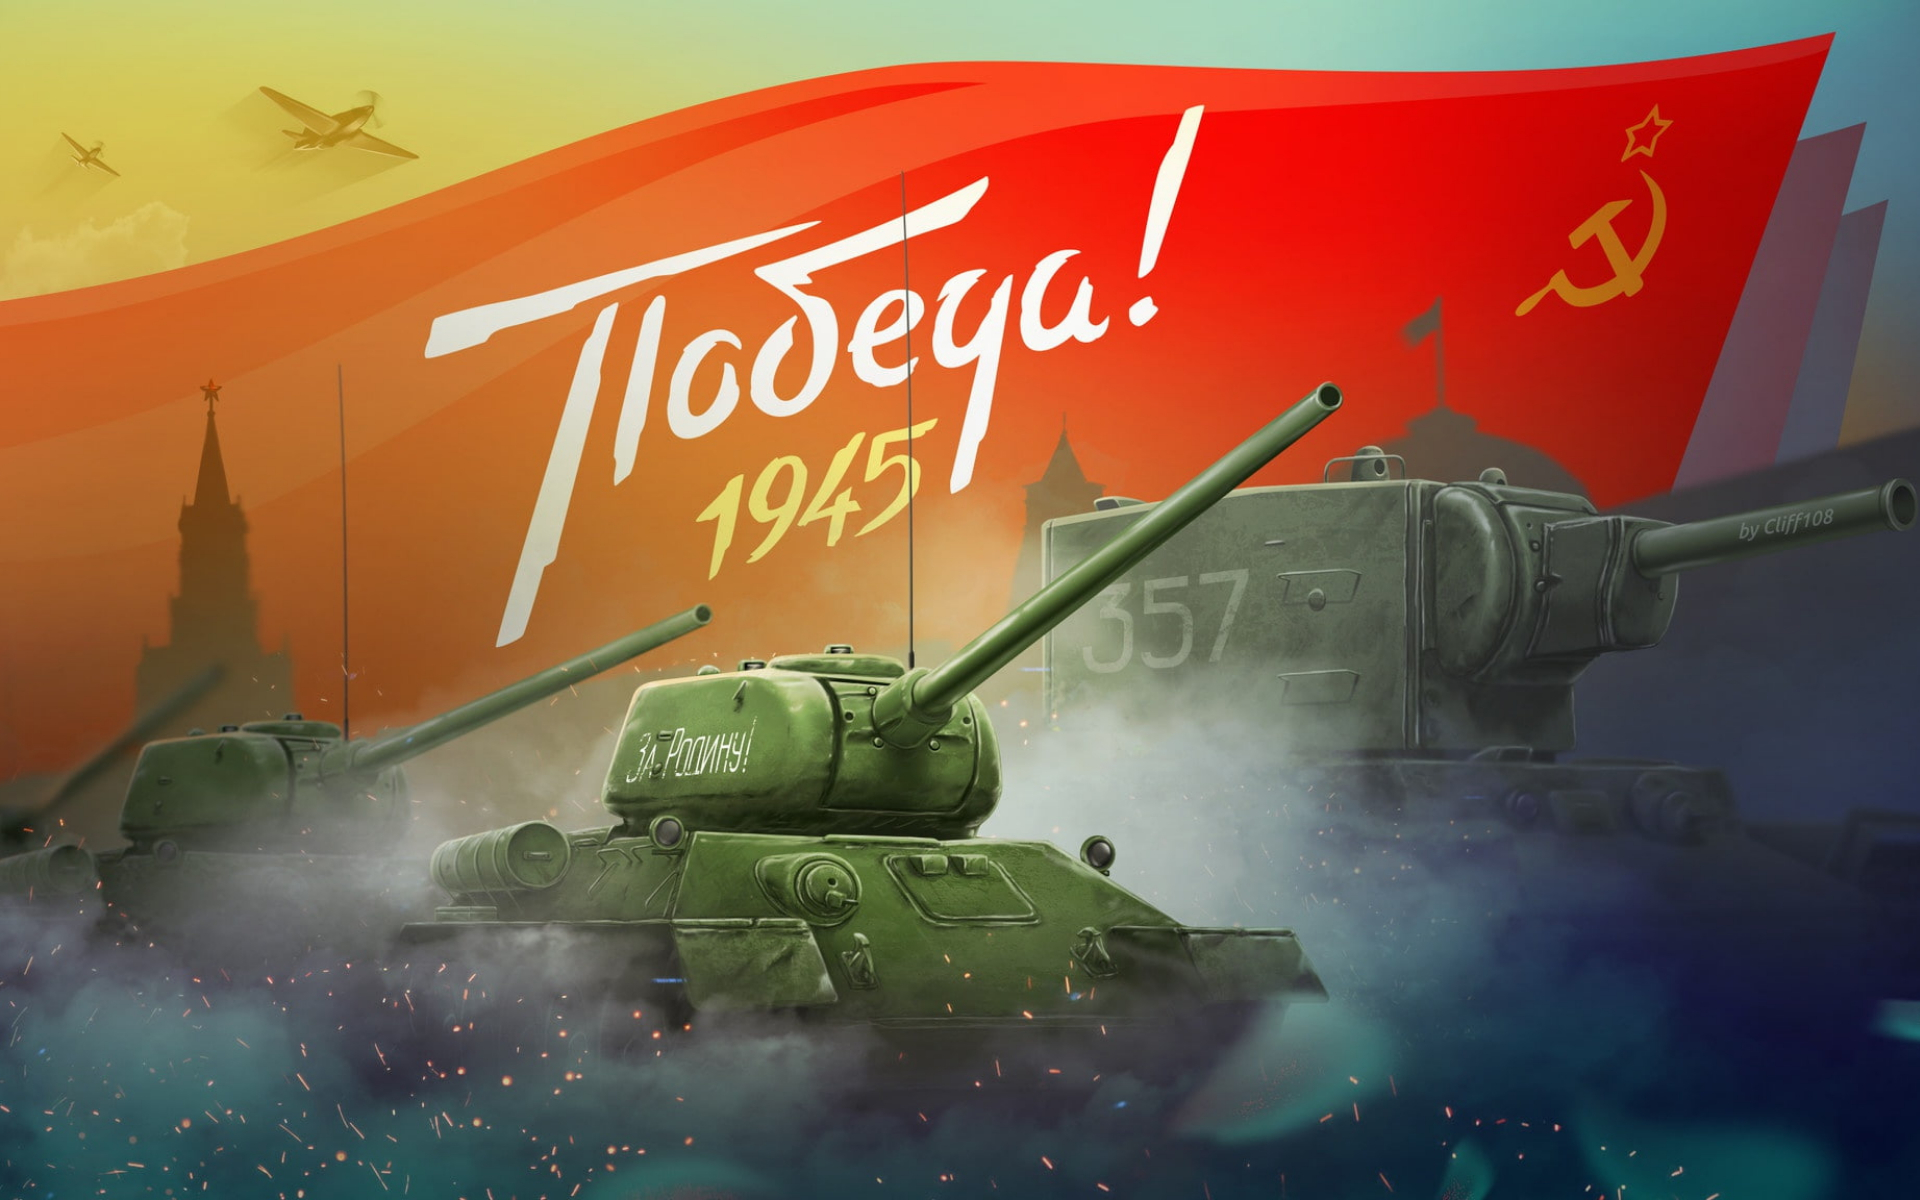 Image: USSR, tank, Victory, 1945, flag, may 9